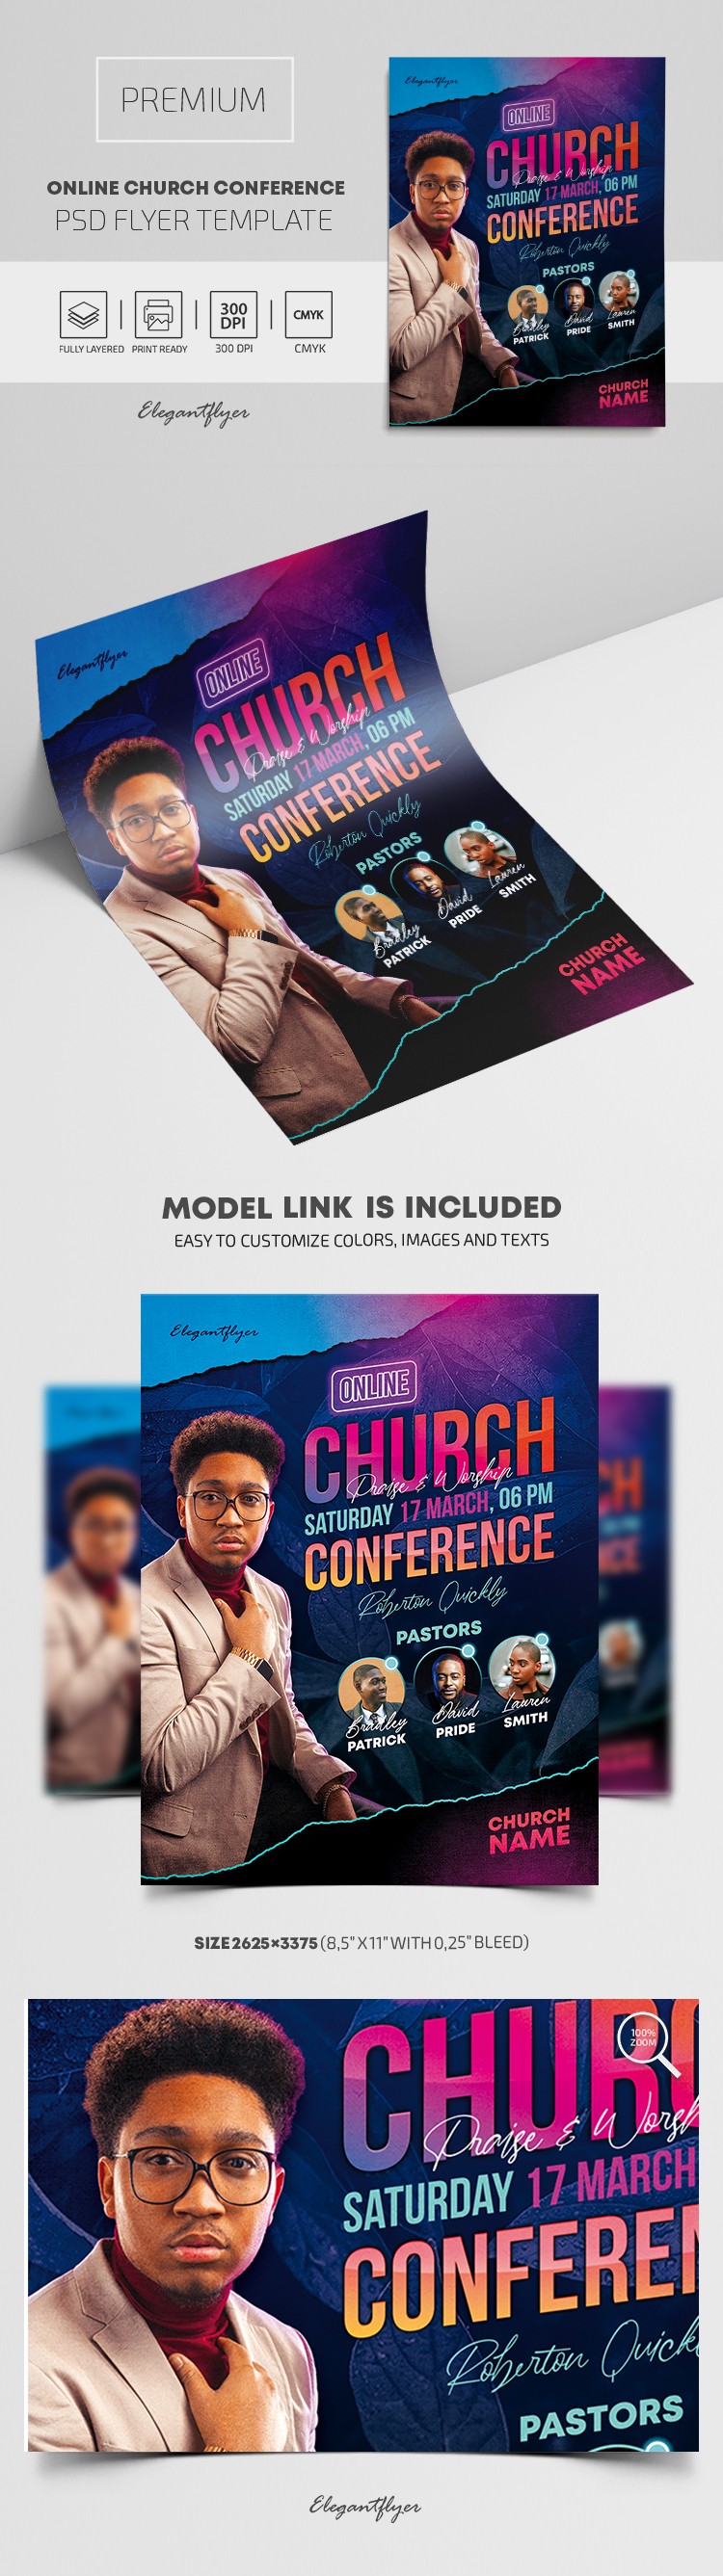 Online Church Conference Flyer by ElegantFlyer